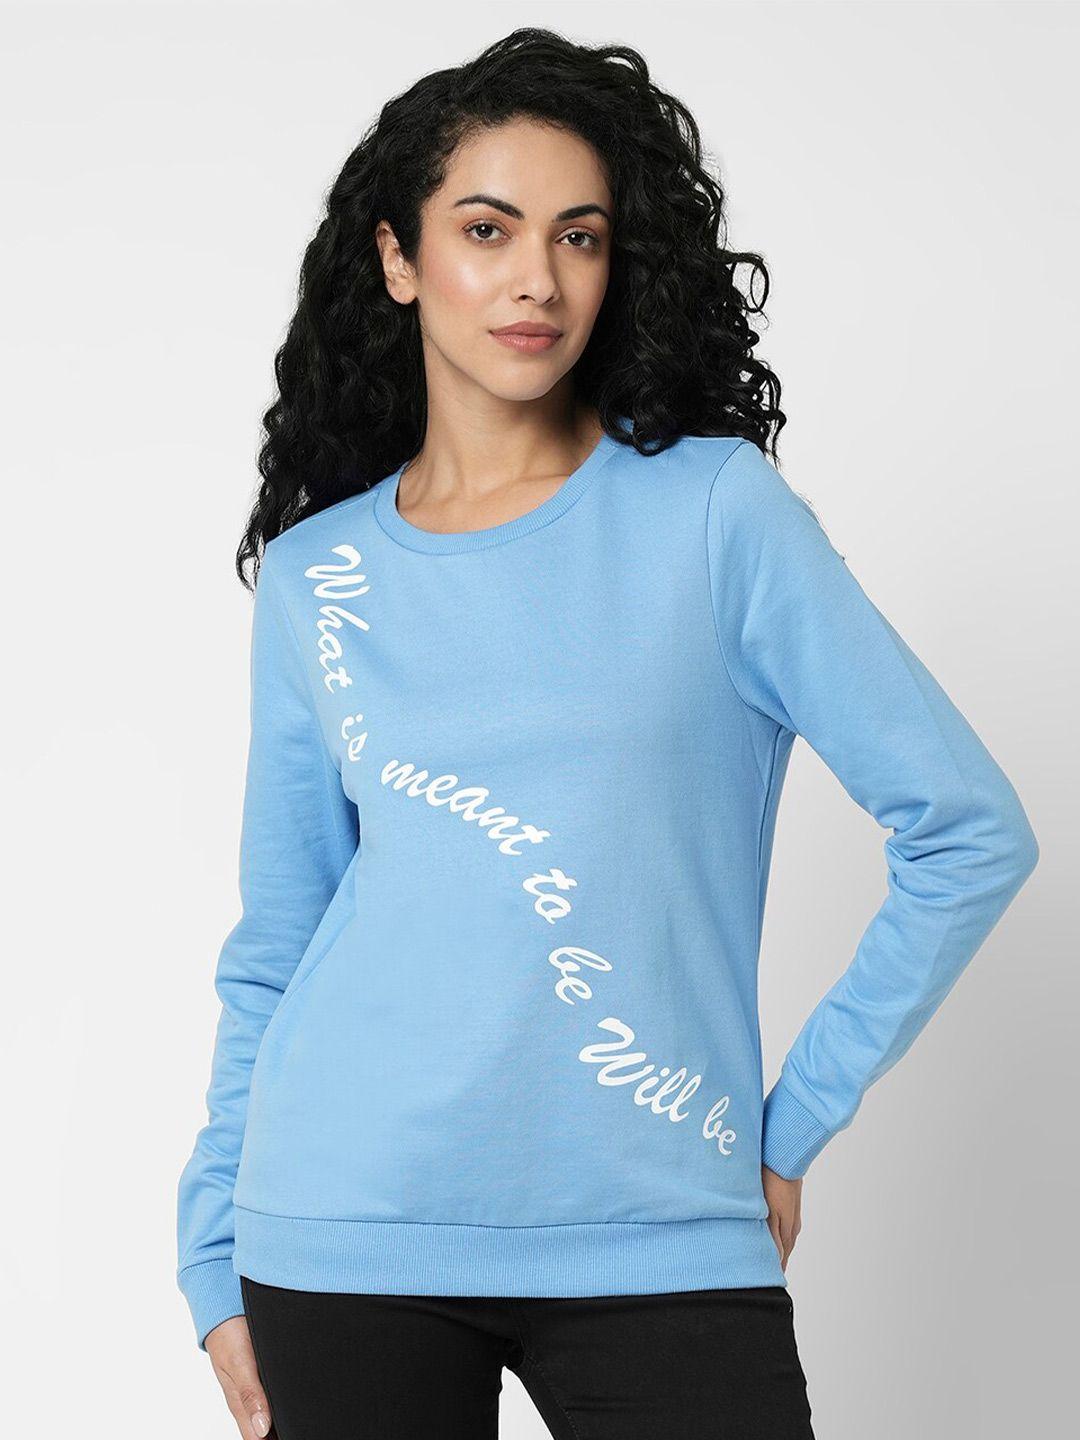 Vero Moda Typography Printed Pure Cotton Sweatshirt